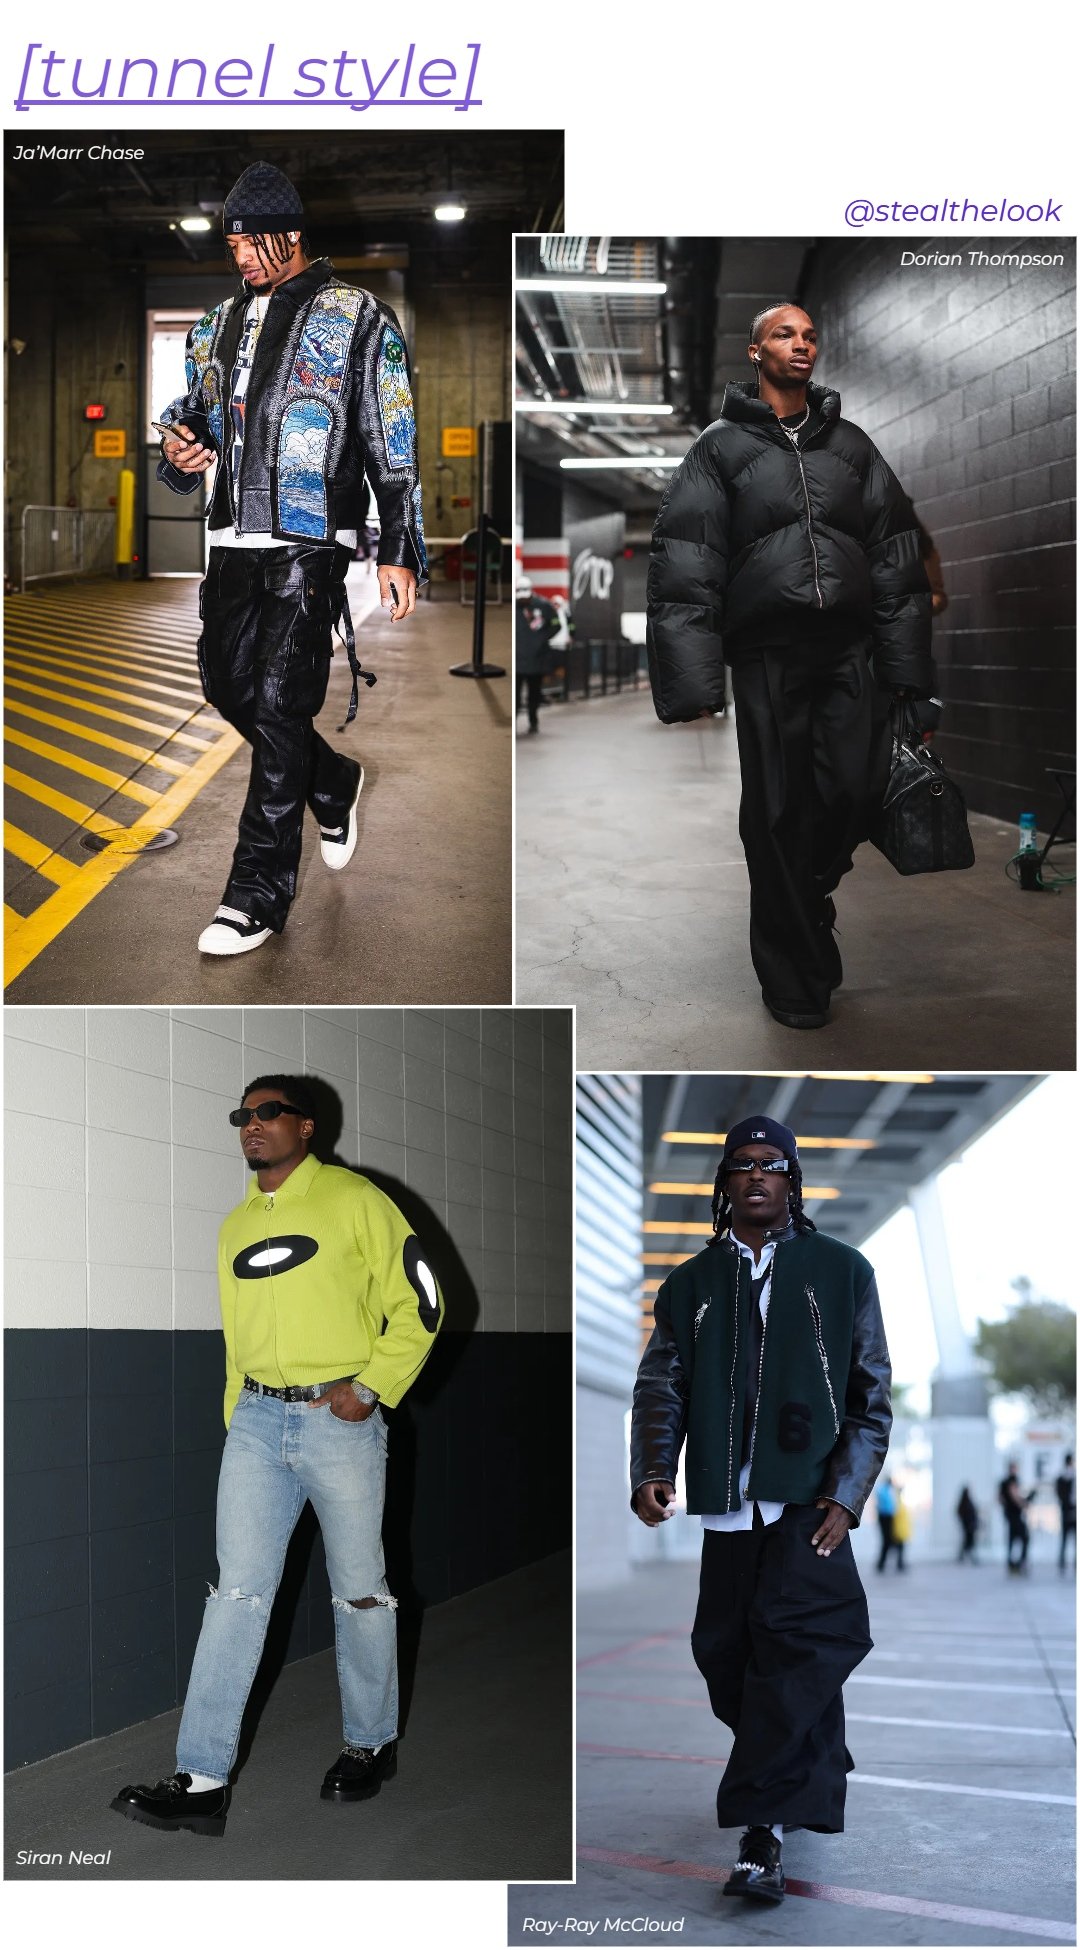 Nnenna Echem - roupas diversas - NFL - inverno - colagem de imagens - https://stealthelook.com.br